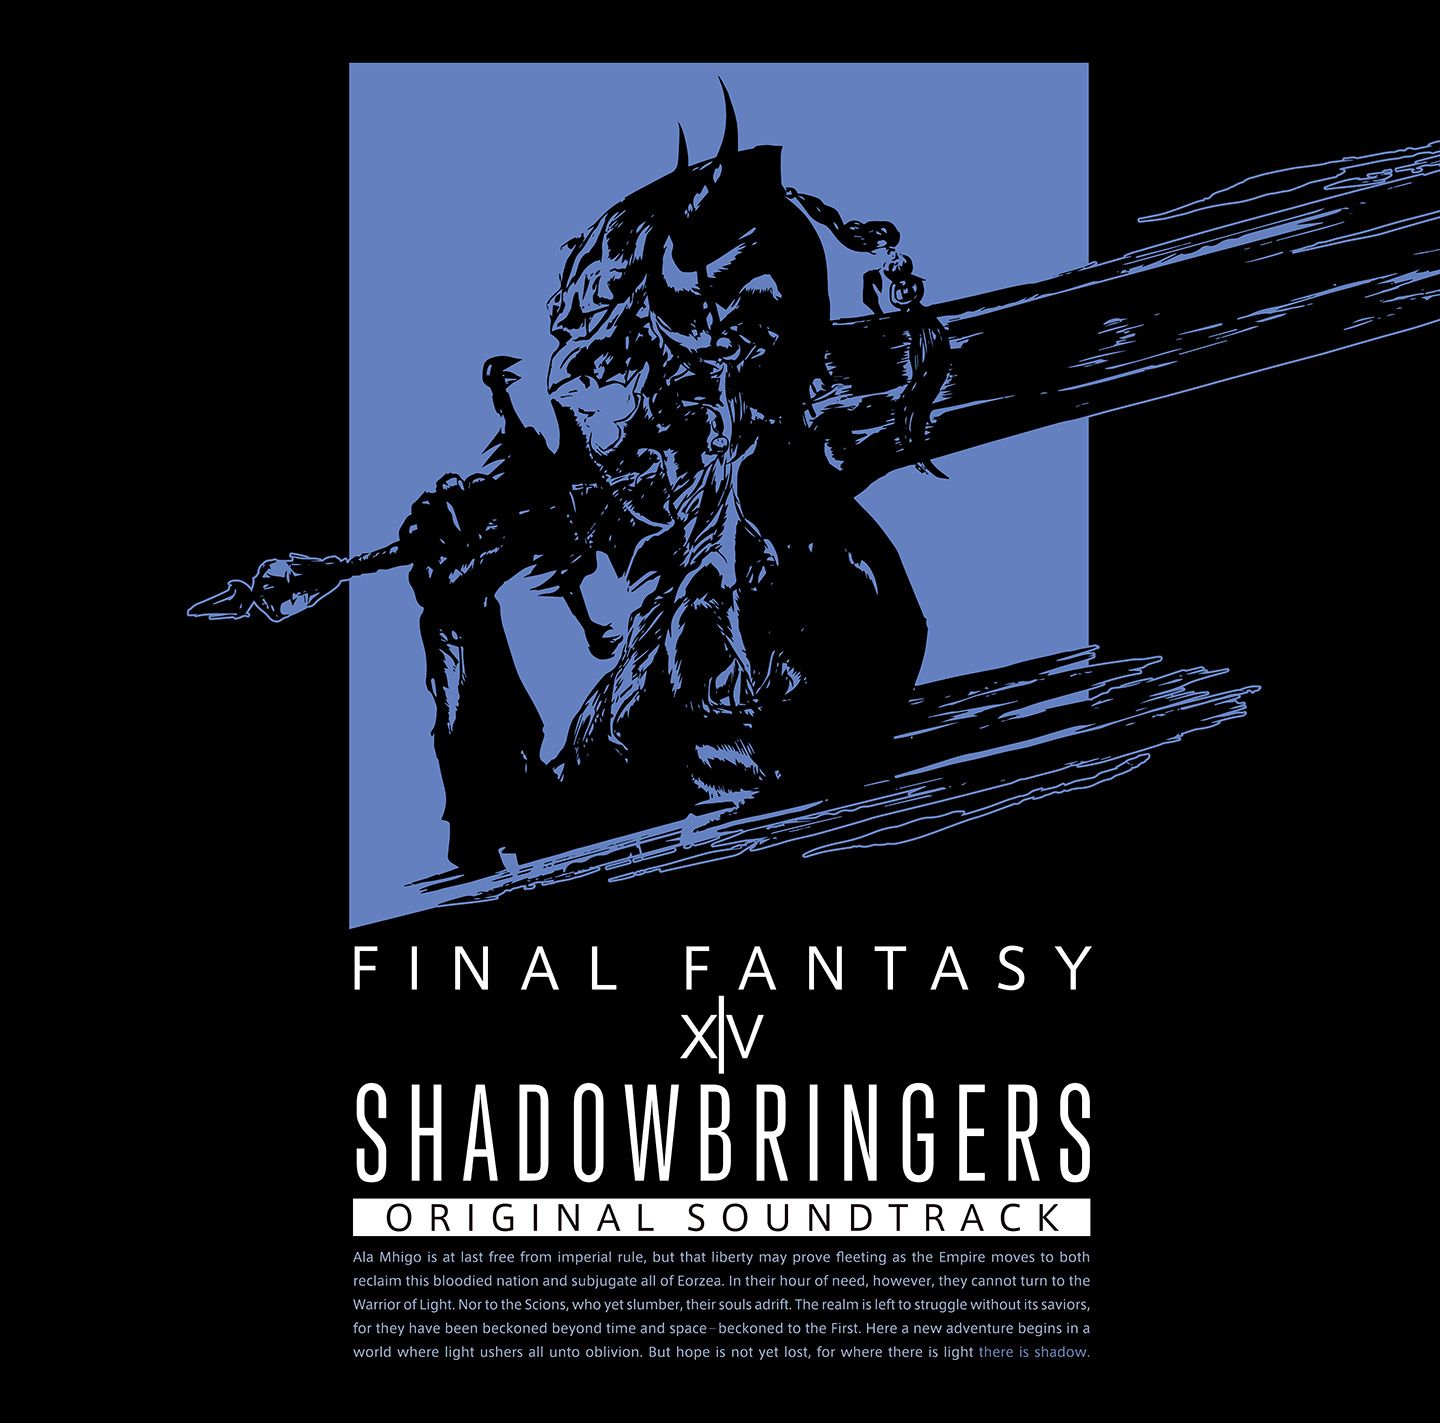 Original soundtracks of Final Fantasy VI, Final Fantasy Wiki